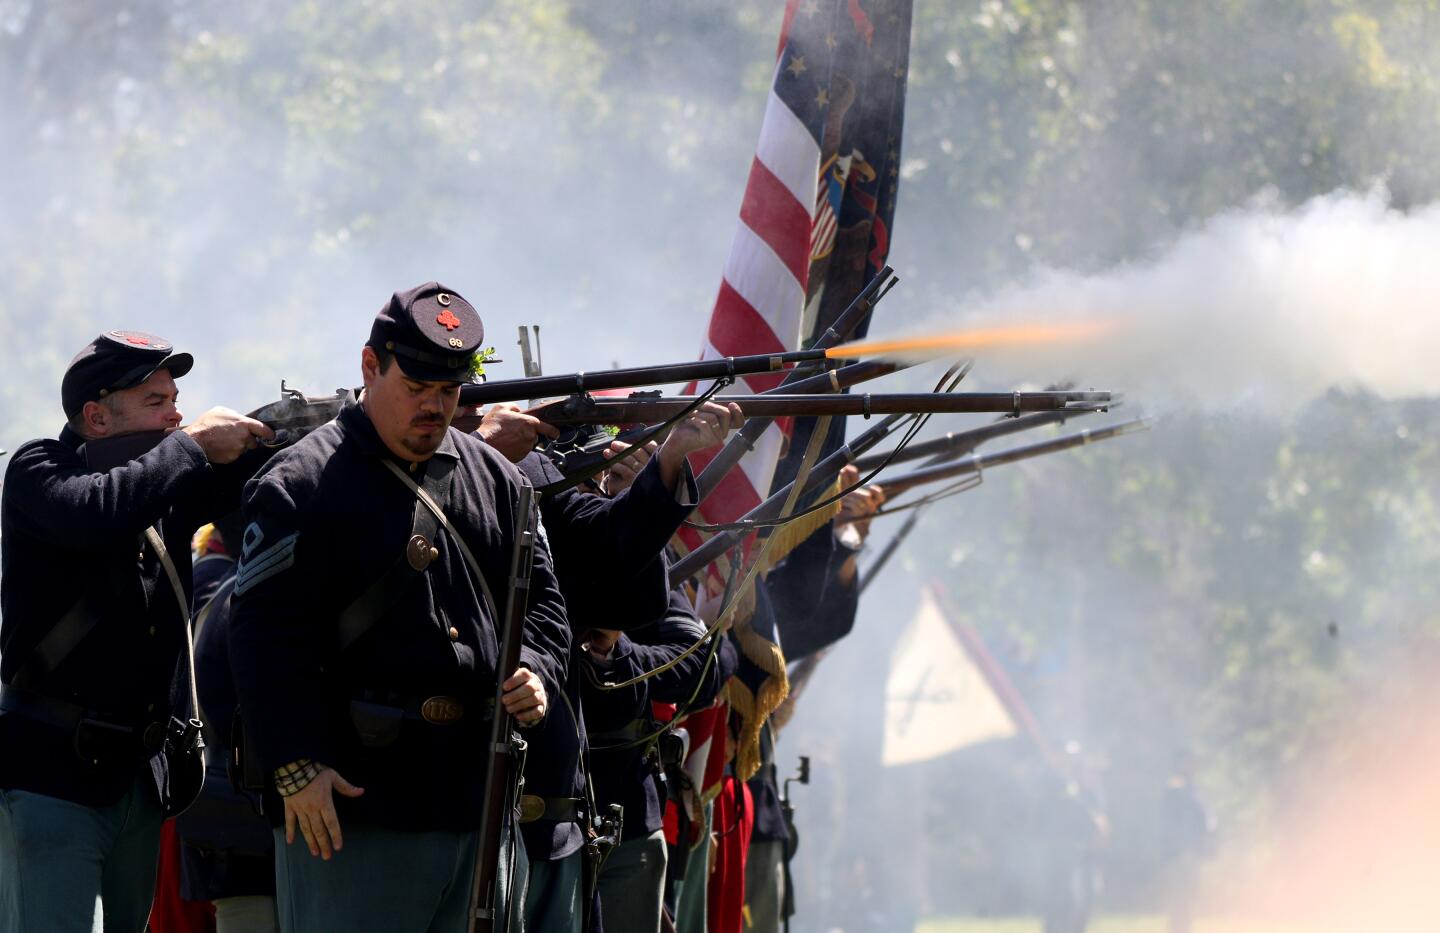 Union battles Rebels at Civil War reenactment